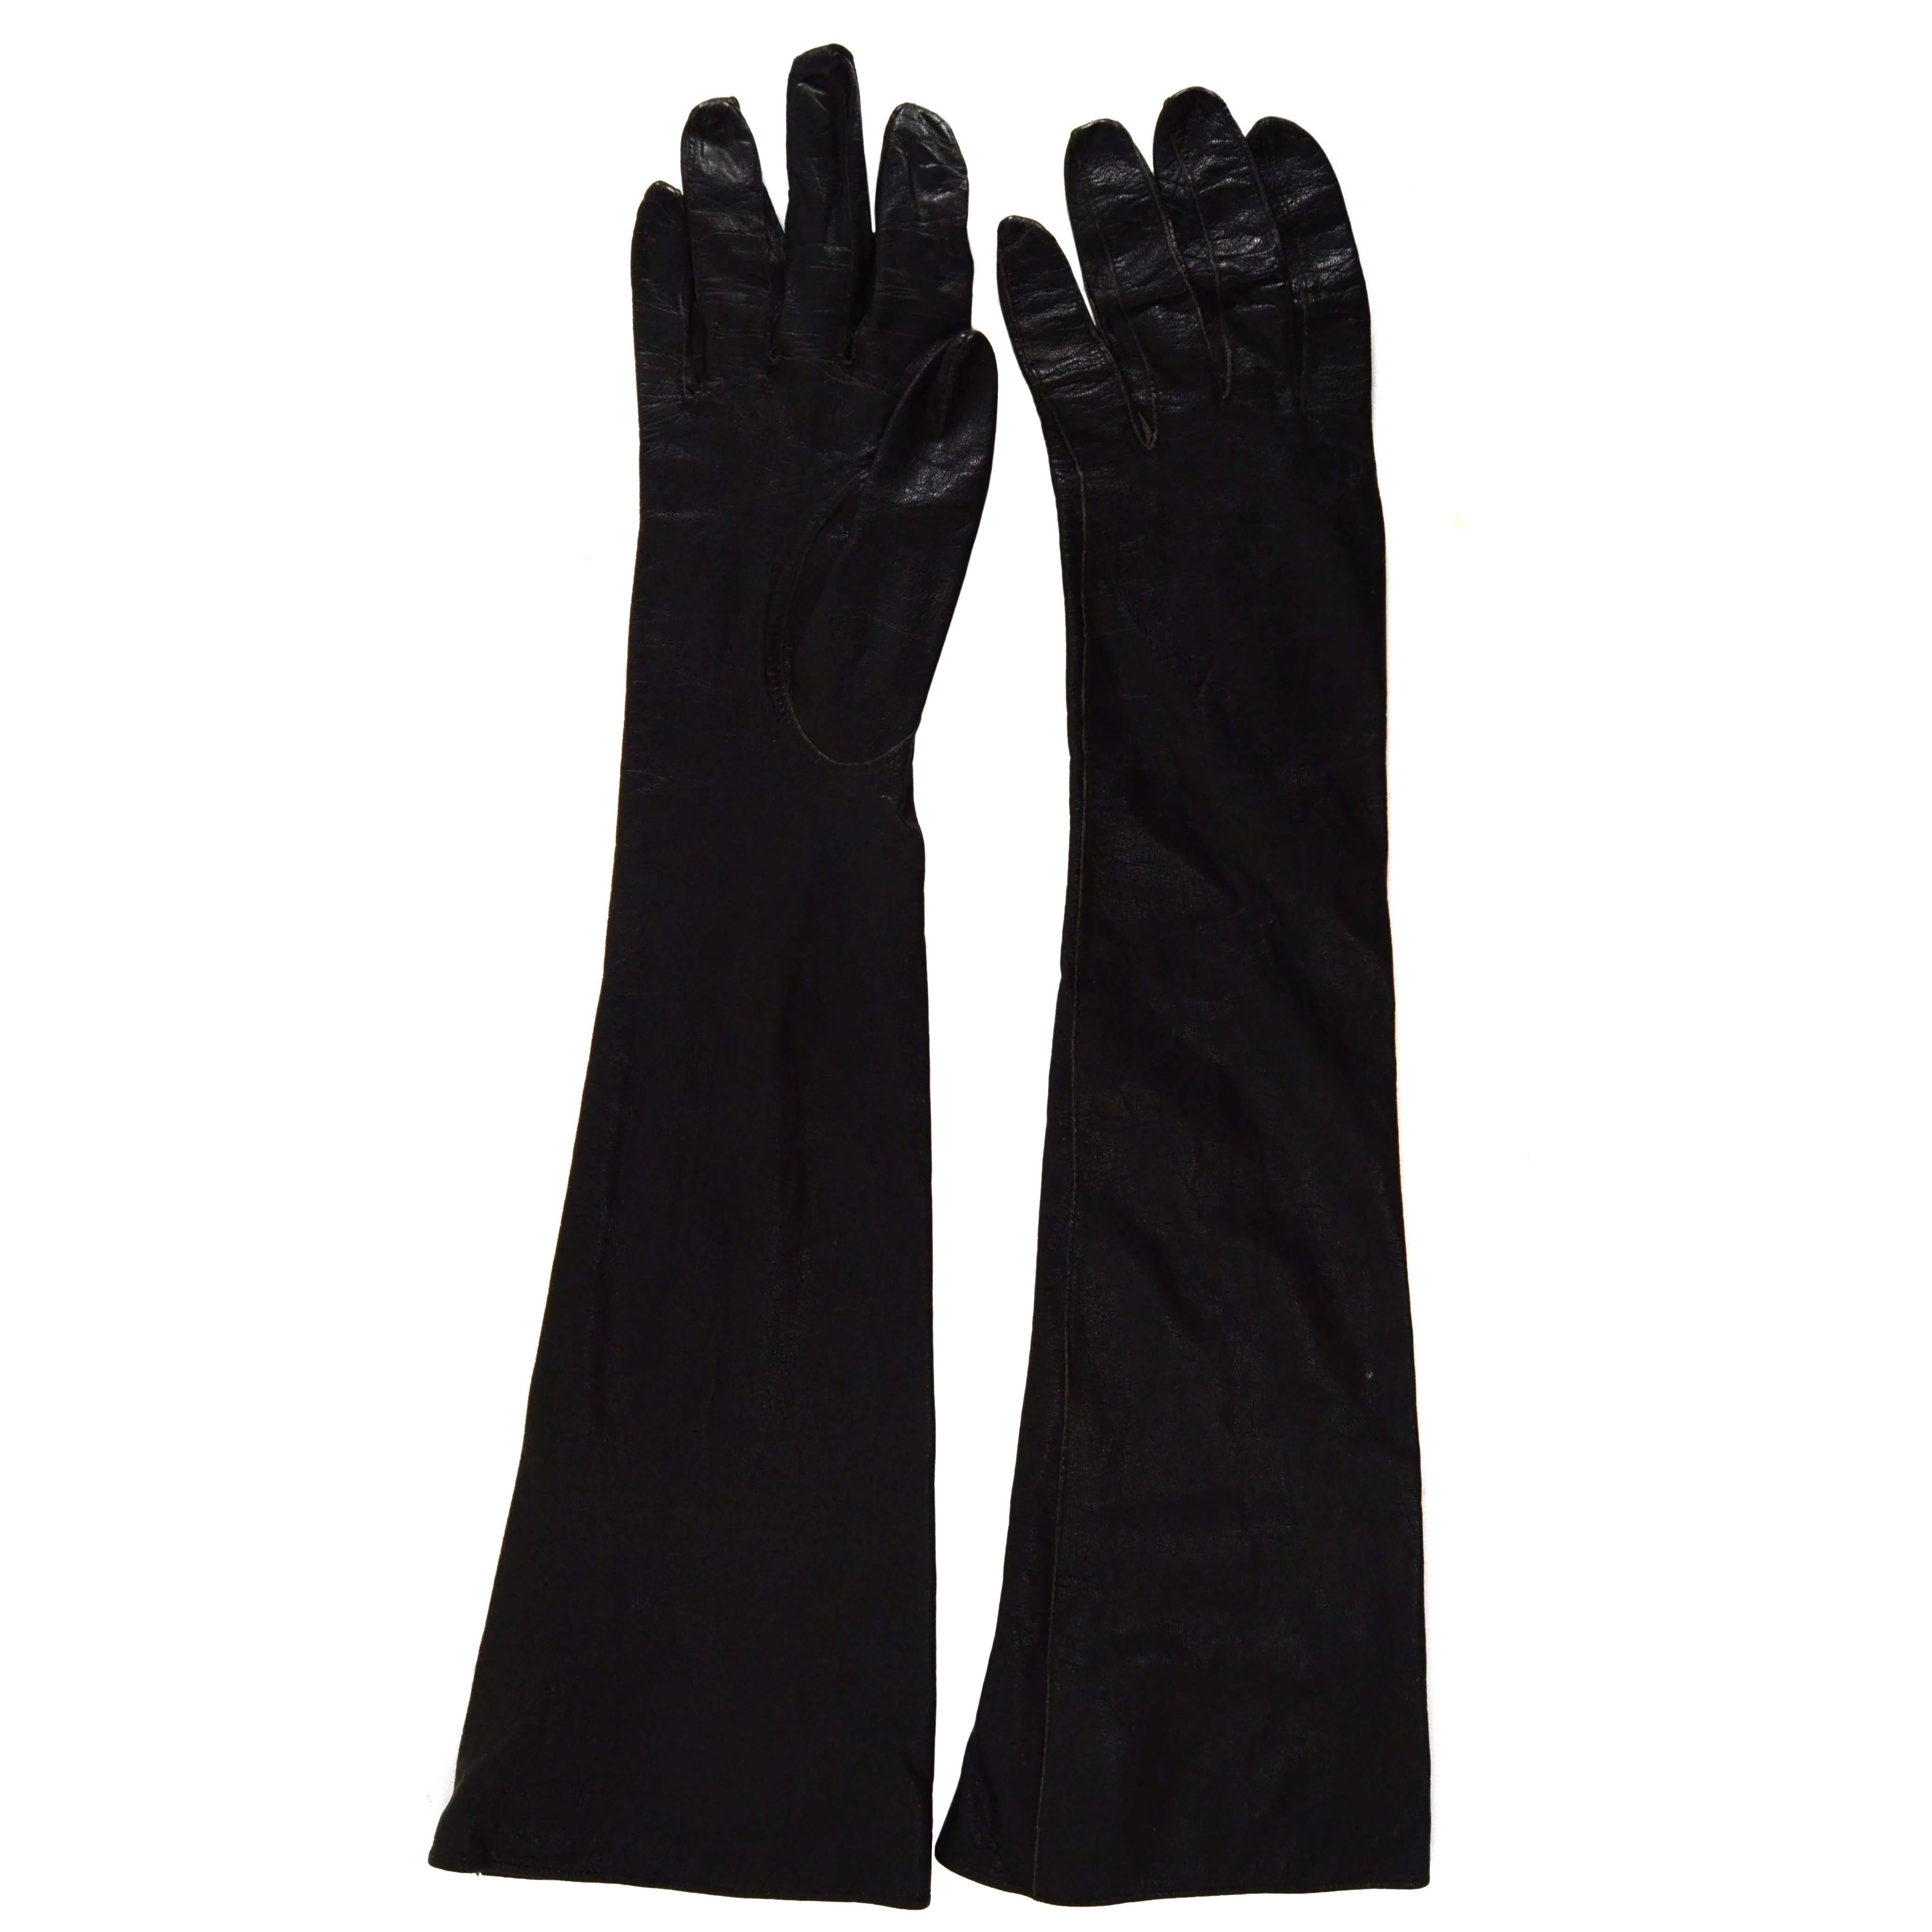 Alexander's Black Leather 3/4 Length Gloves sz 7.5